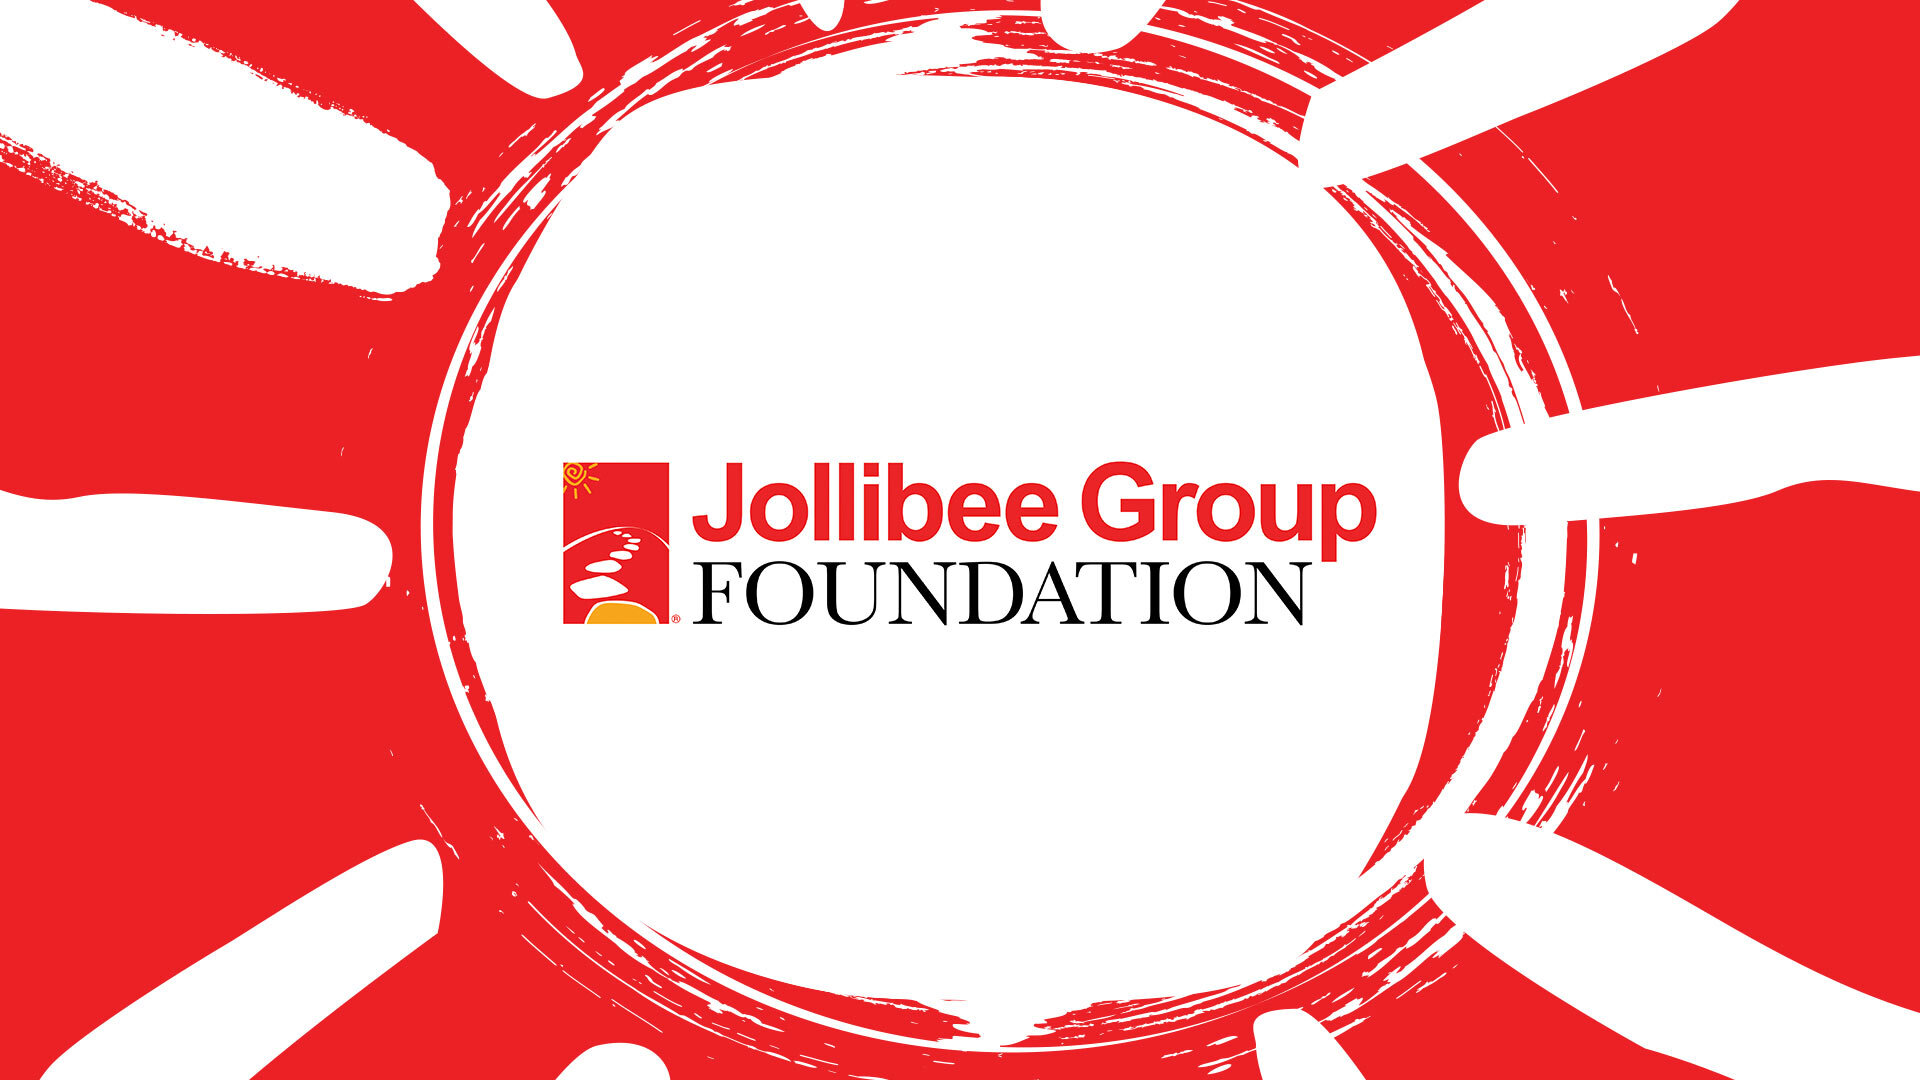 VCS_JOLLIBEE-GROUP-FOUNDATION.jpg